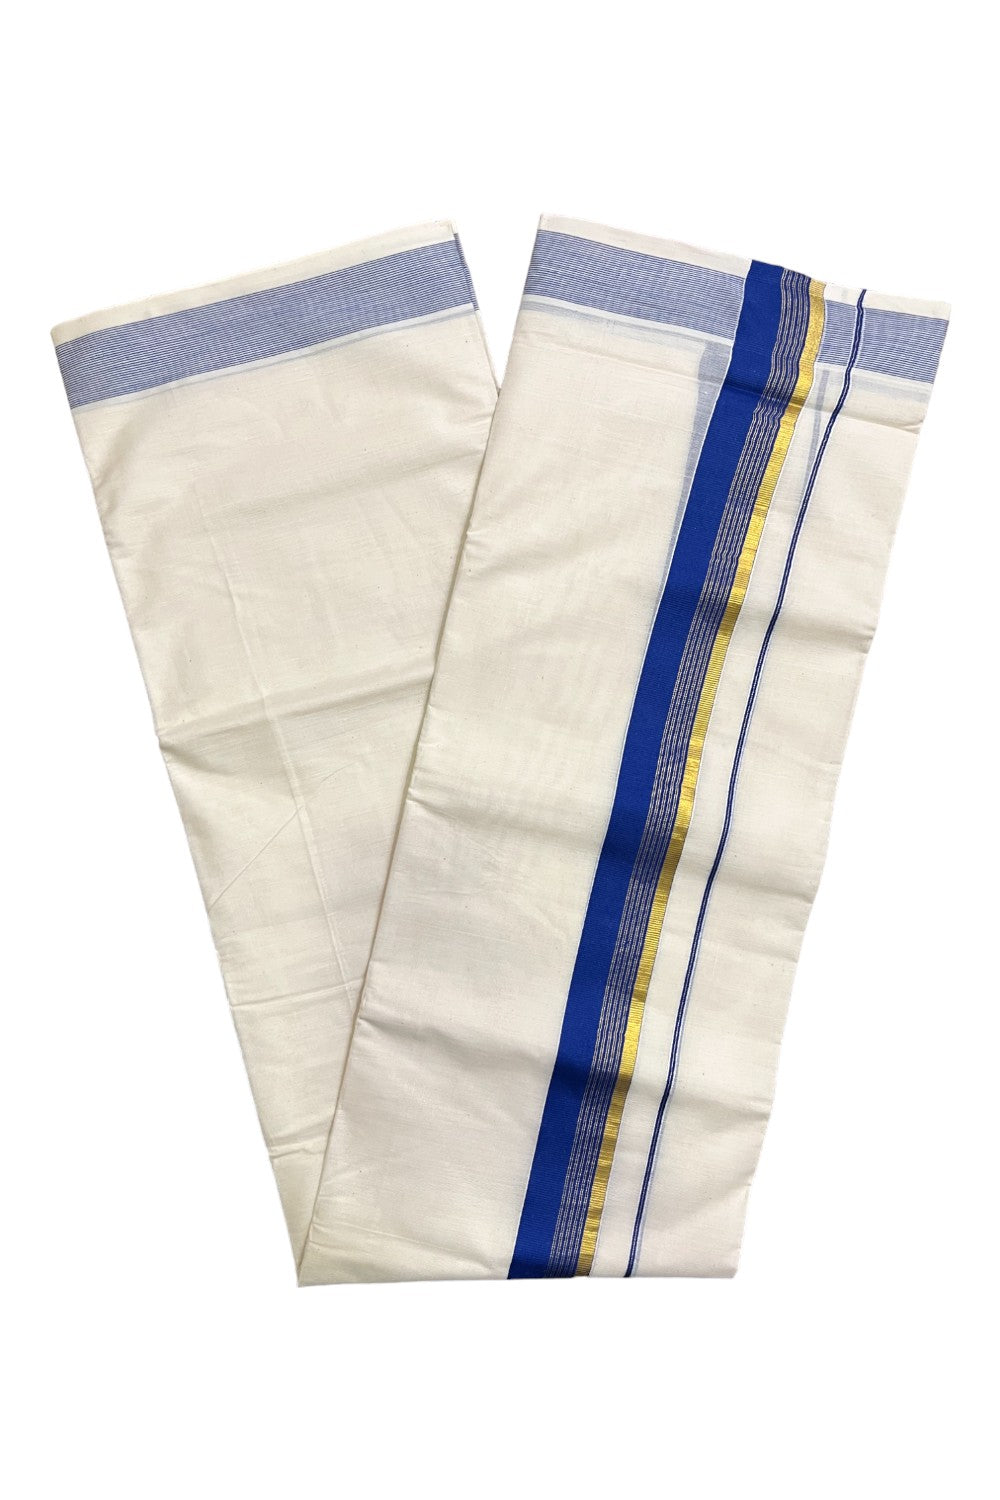 Kerala Pure Cotton Double Mundu with Blue and Kasavu Border (South Indian Kerala Dhoti)